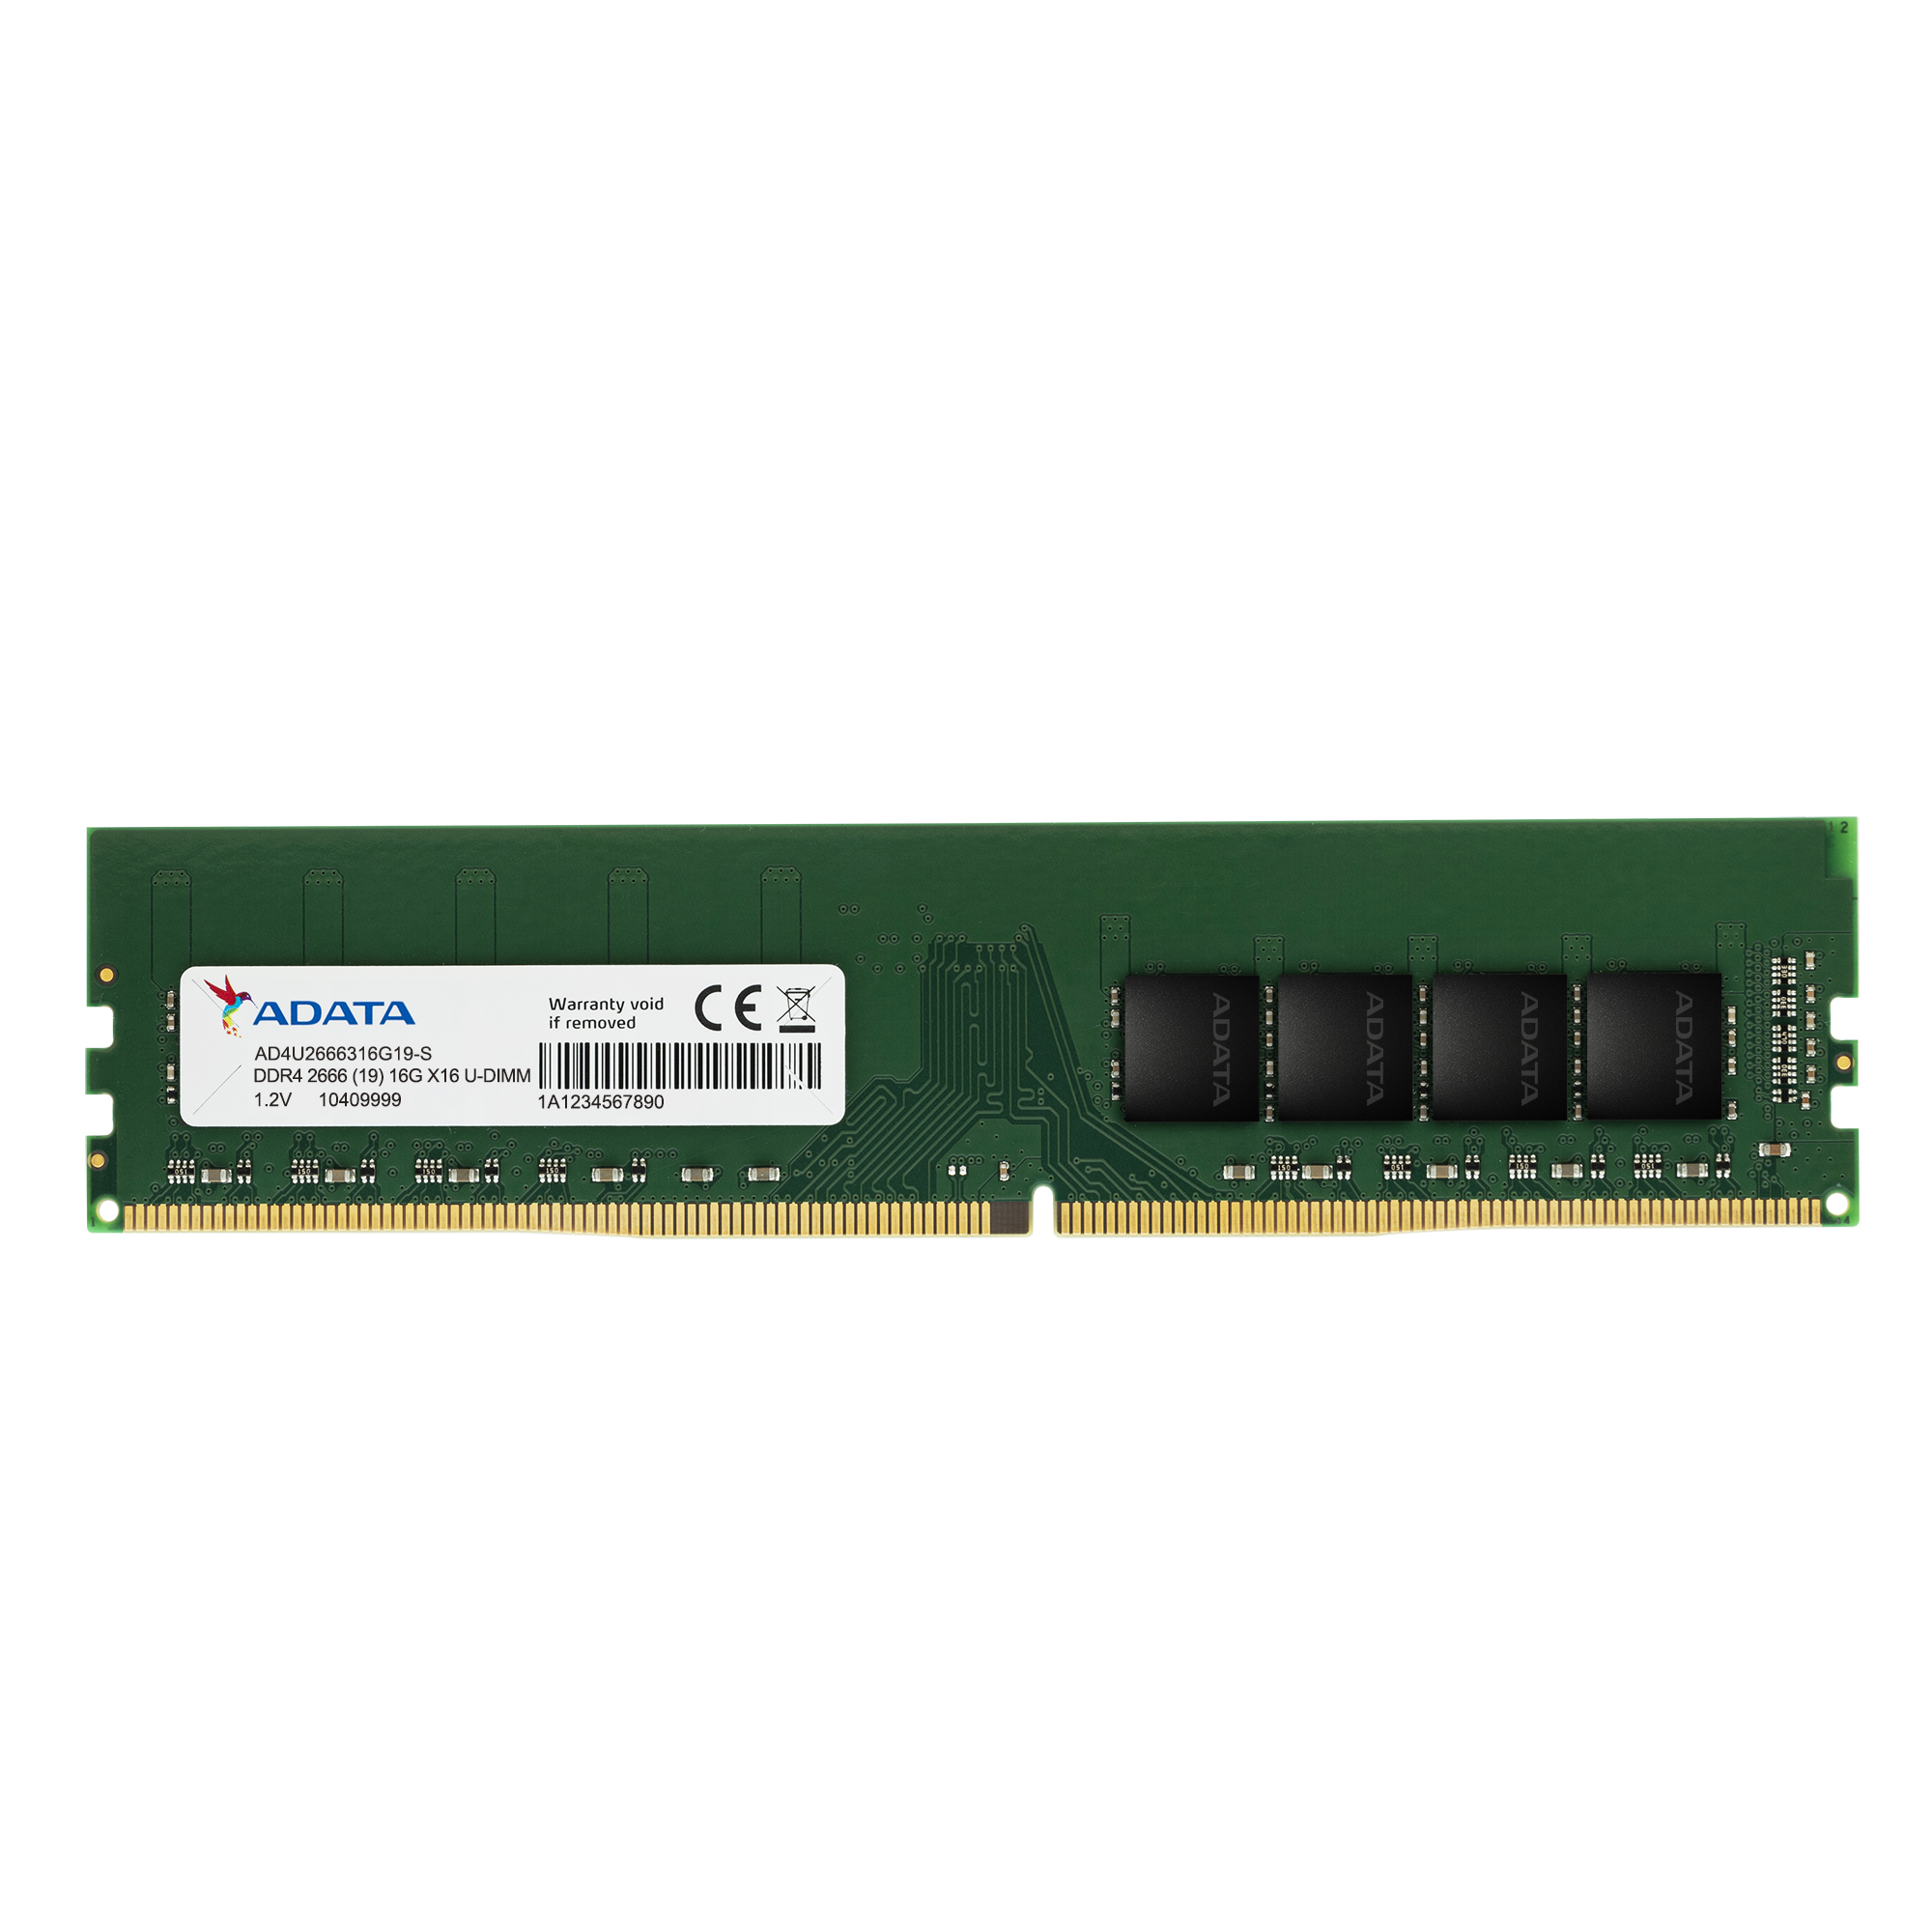 ADATA 8GB DDR4 2666 AD4S266638G19-S SODIMM 260-Pin Laptop Memory Module Single Rank PC4-21300